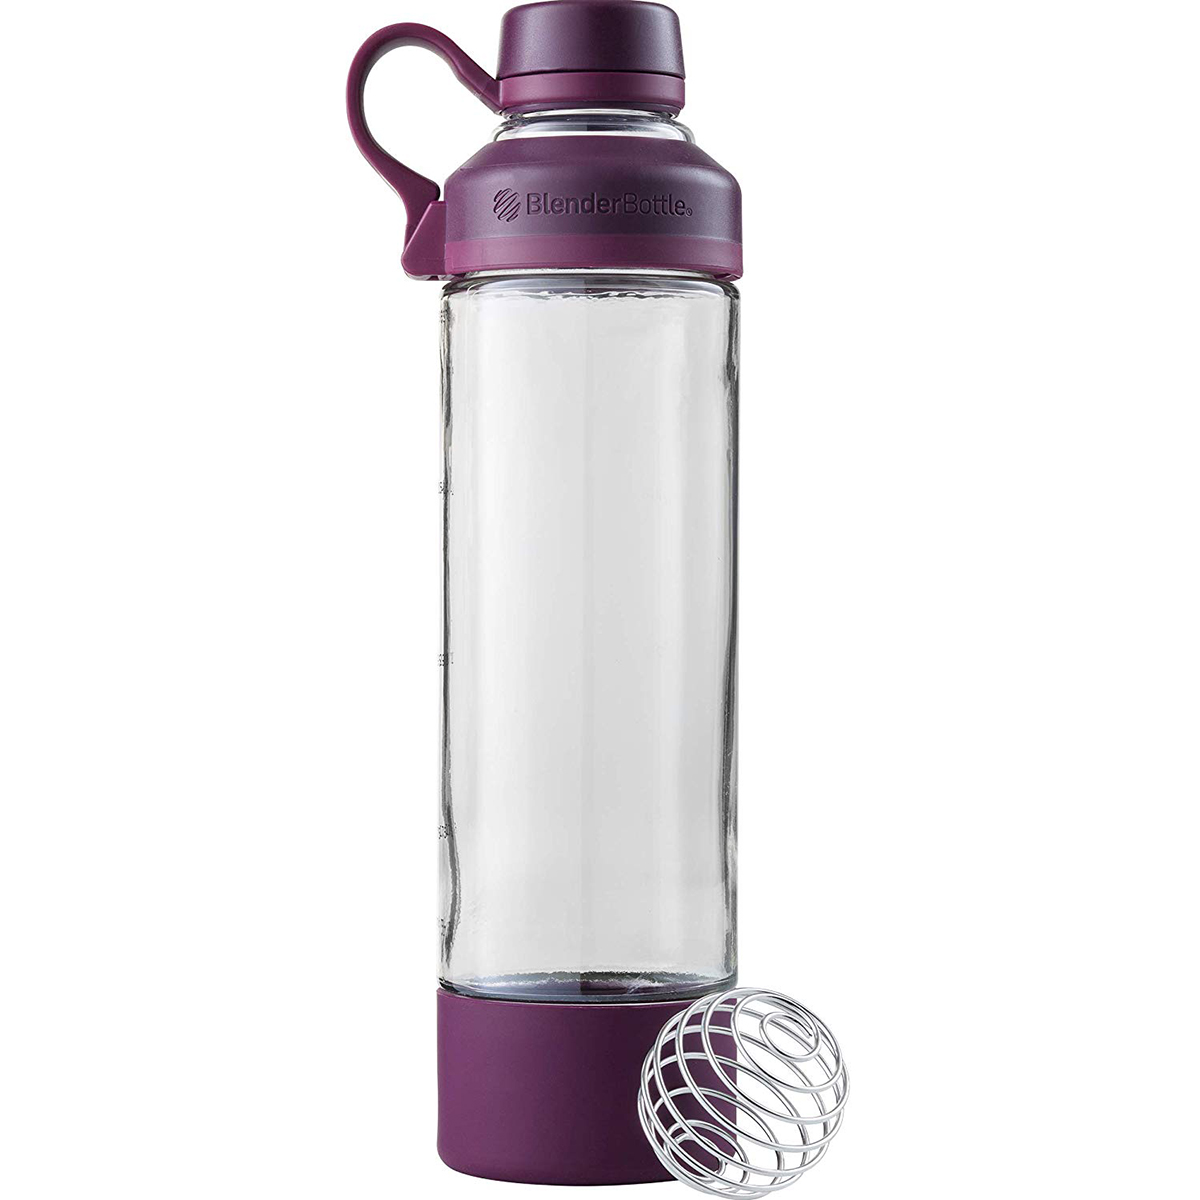 BlenderBottle Mantra 20 oz Glass Shaker Bottle Purple Plum with Twist Lid - image 1 of 10